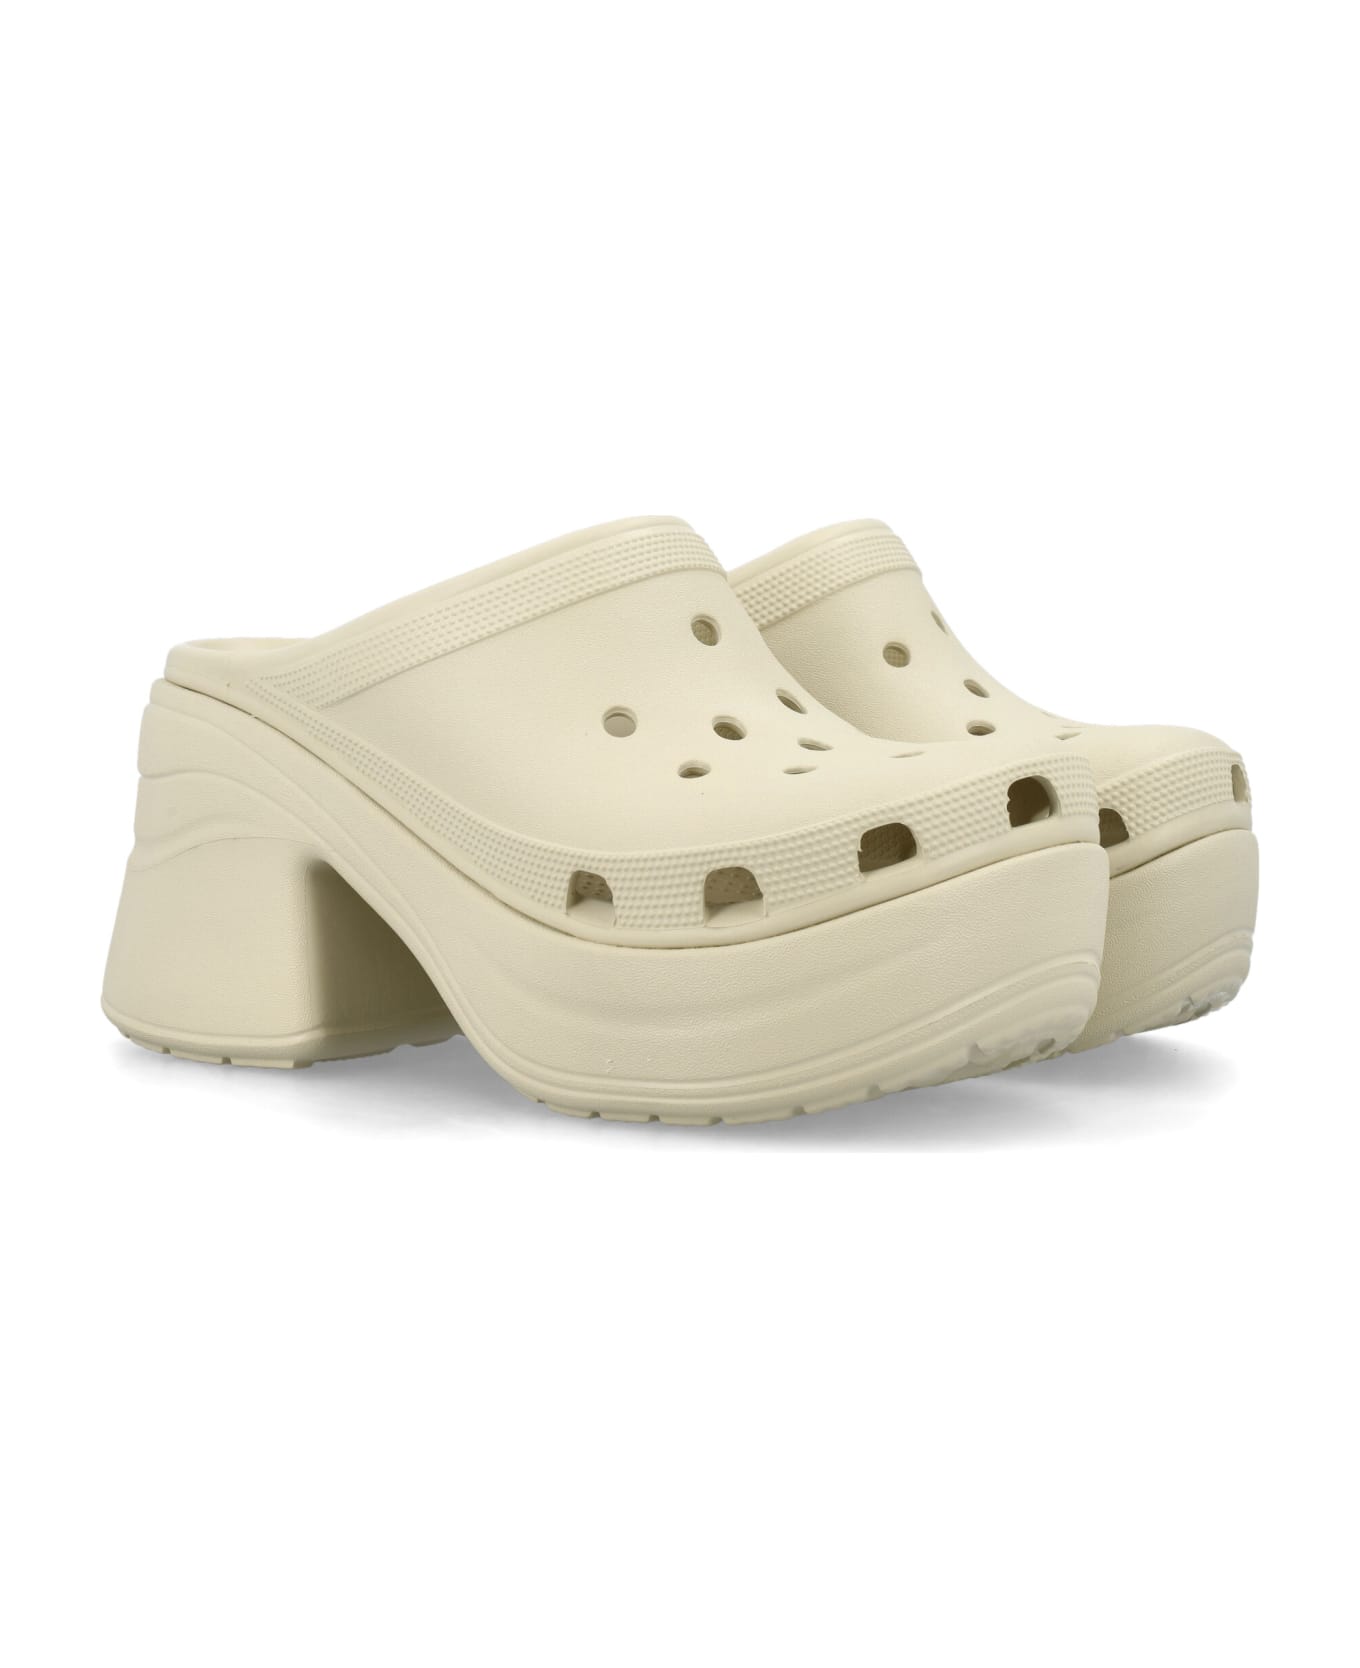 Crocs Siren Clog - BONE